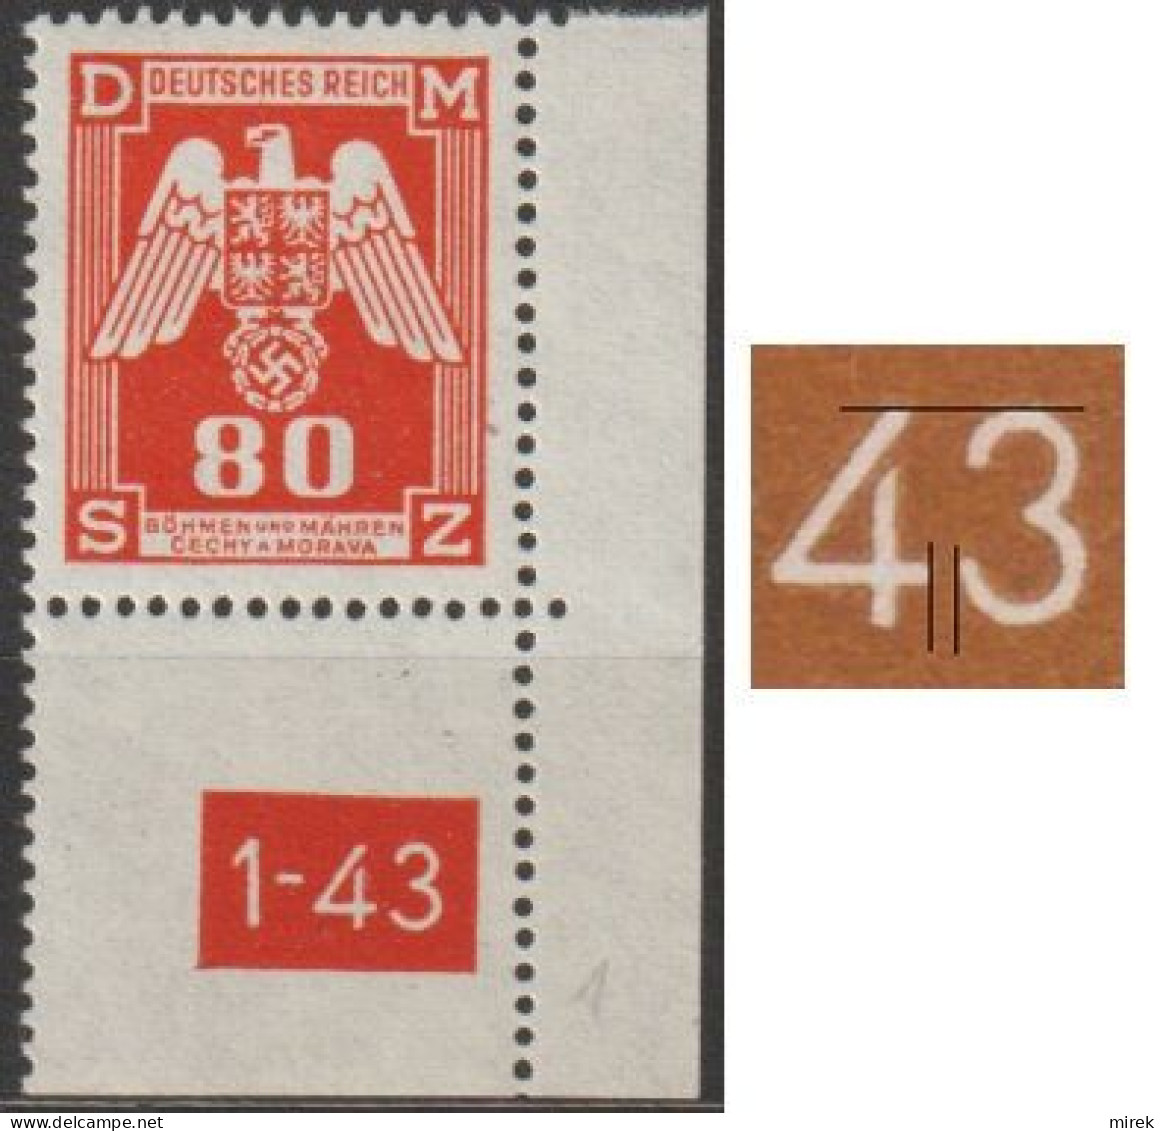 017/ Pof. SL 17, Corner Stamp, Plate Number 1-43, Type 1, Var. 1 - Unused Stamps